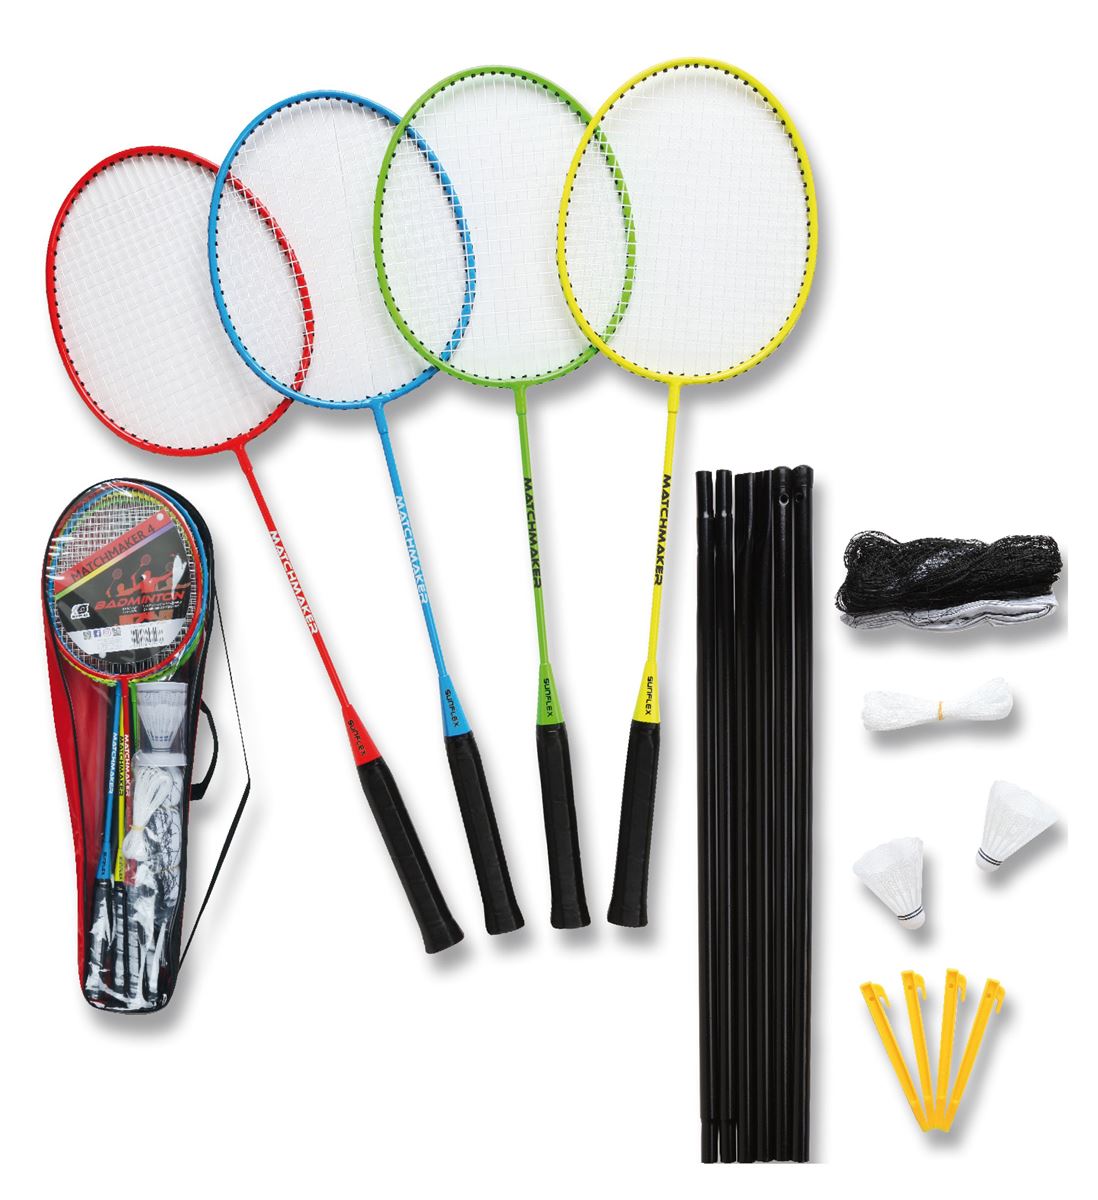 sunflex badminton set MATCHMAKER 4